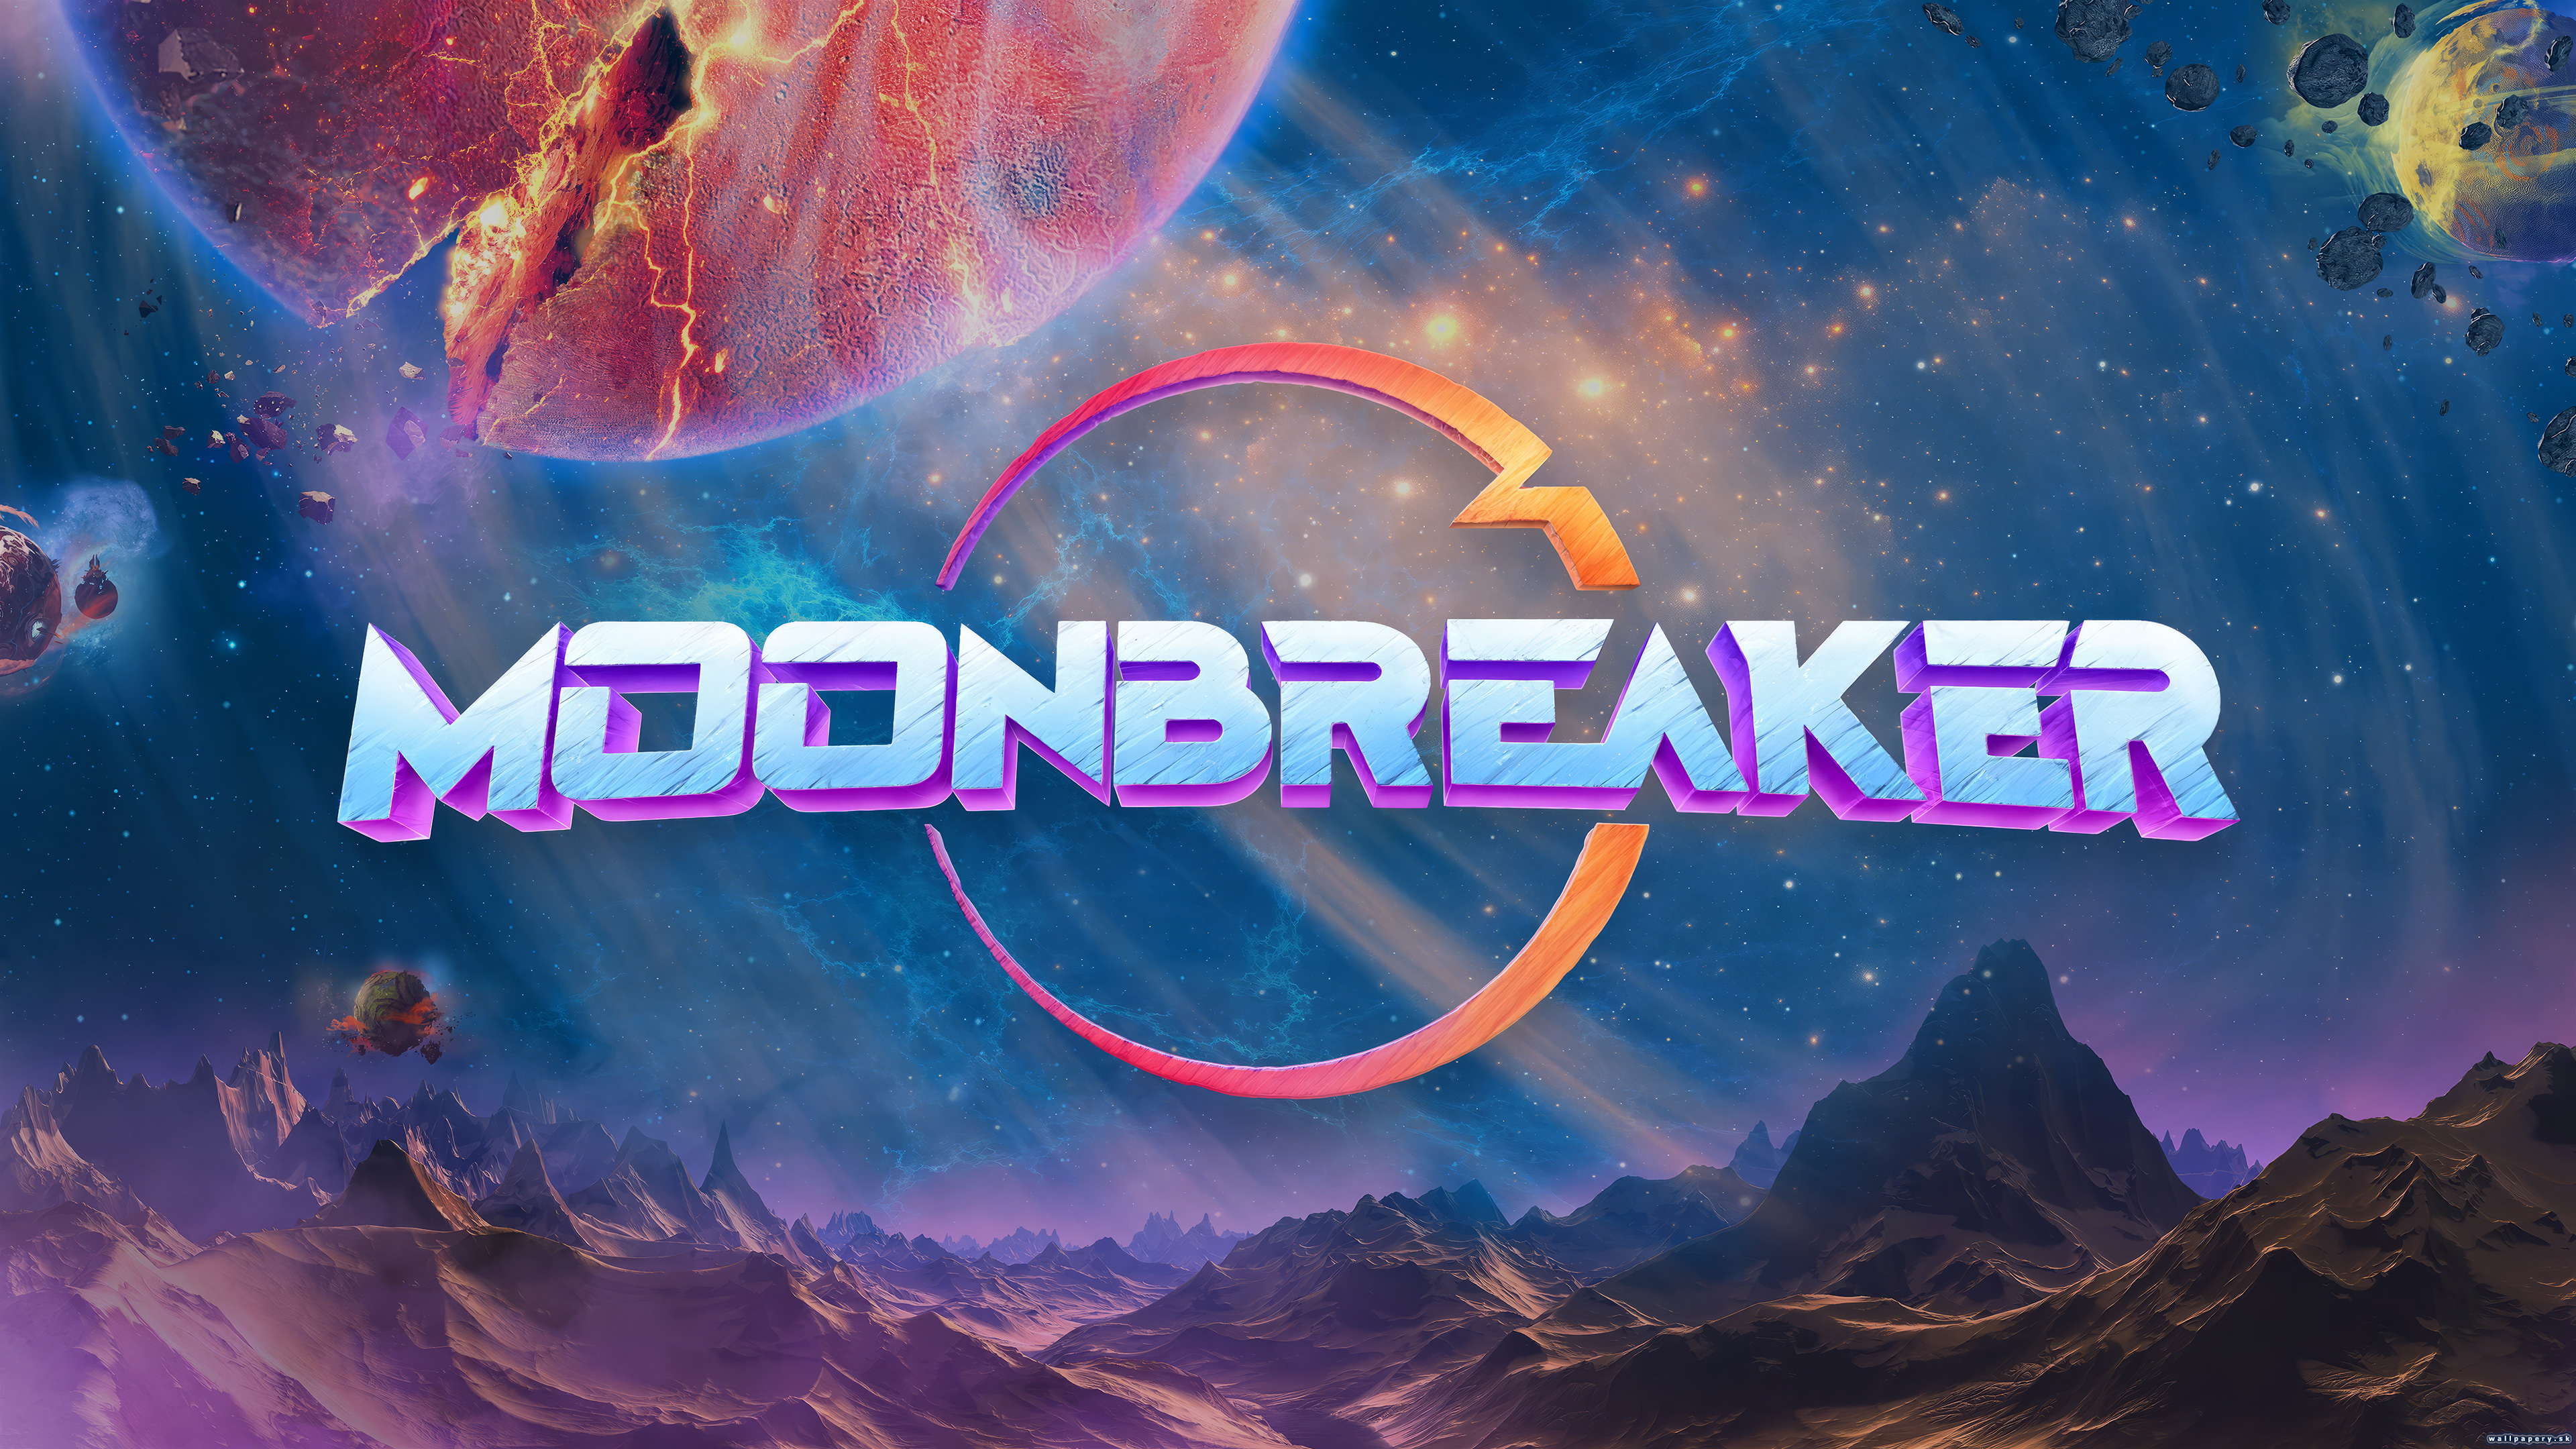 Moonbreaker - wallpaper 4